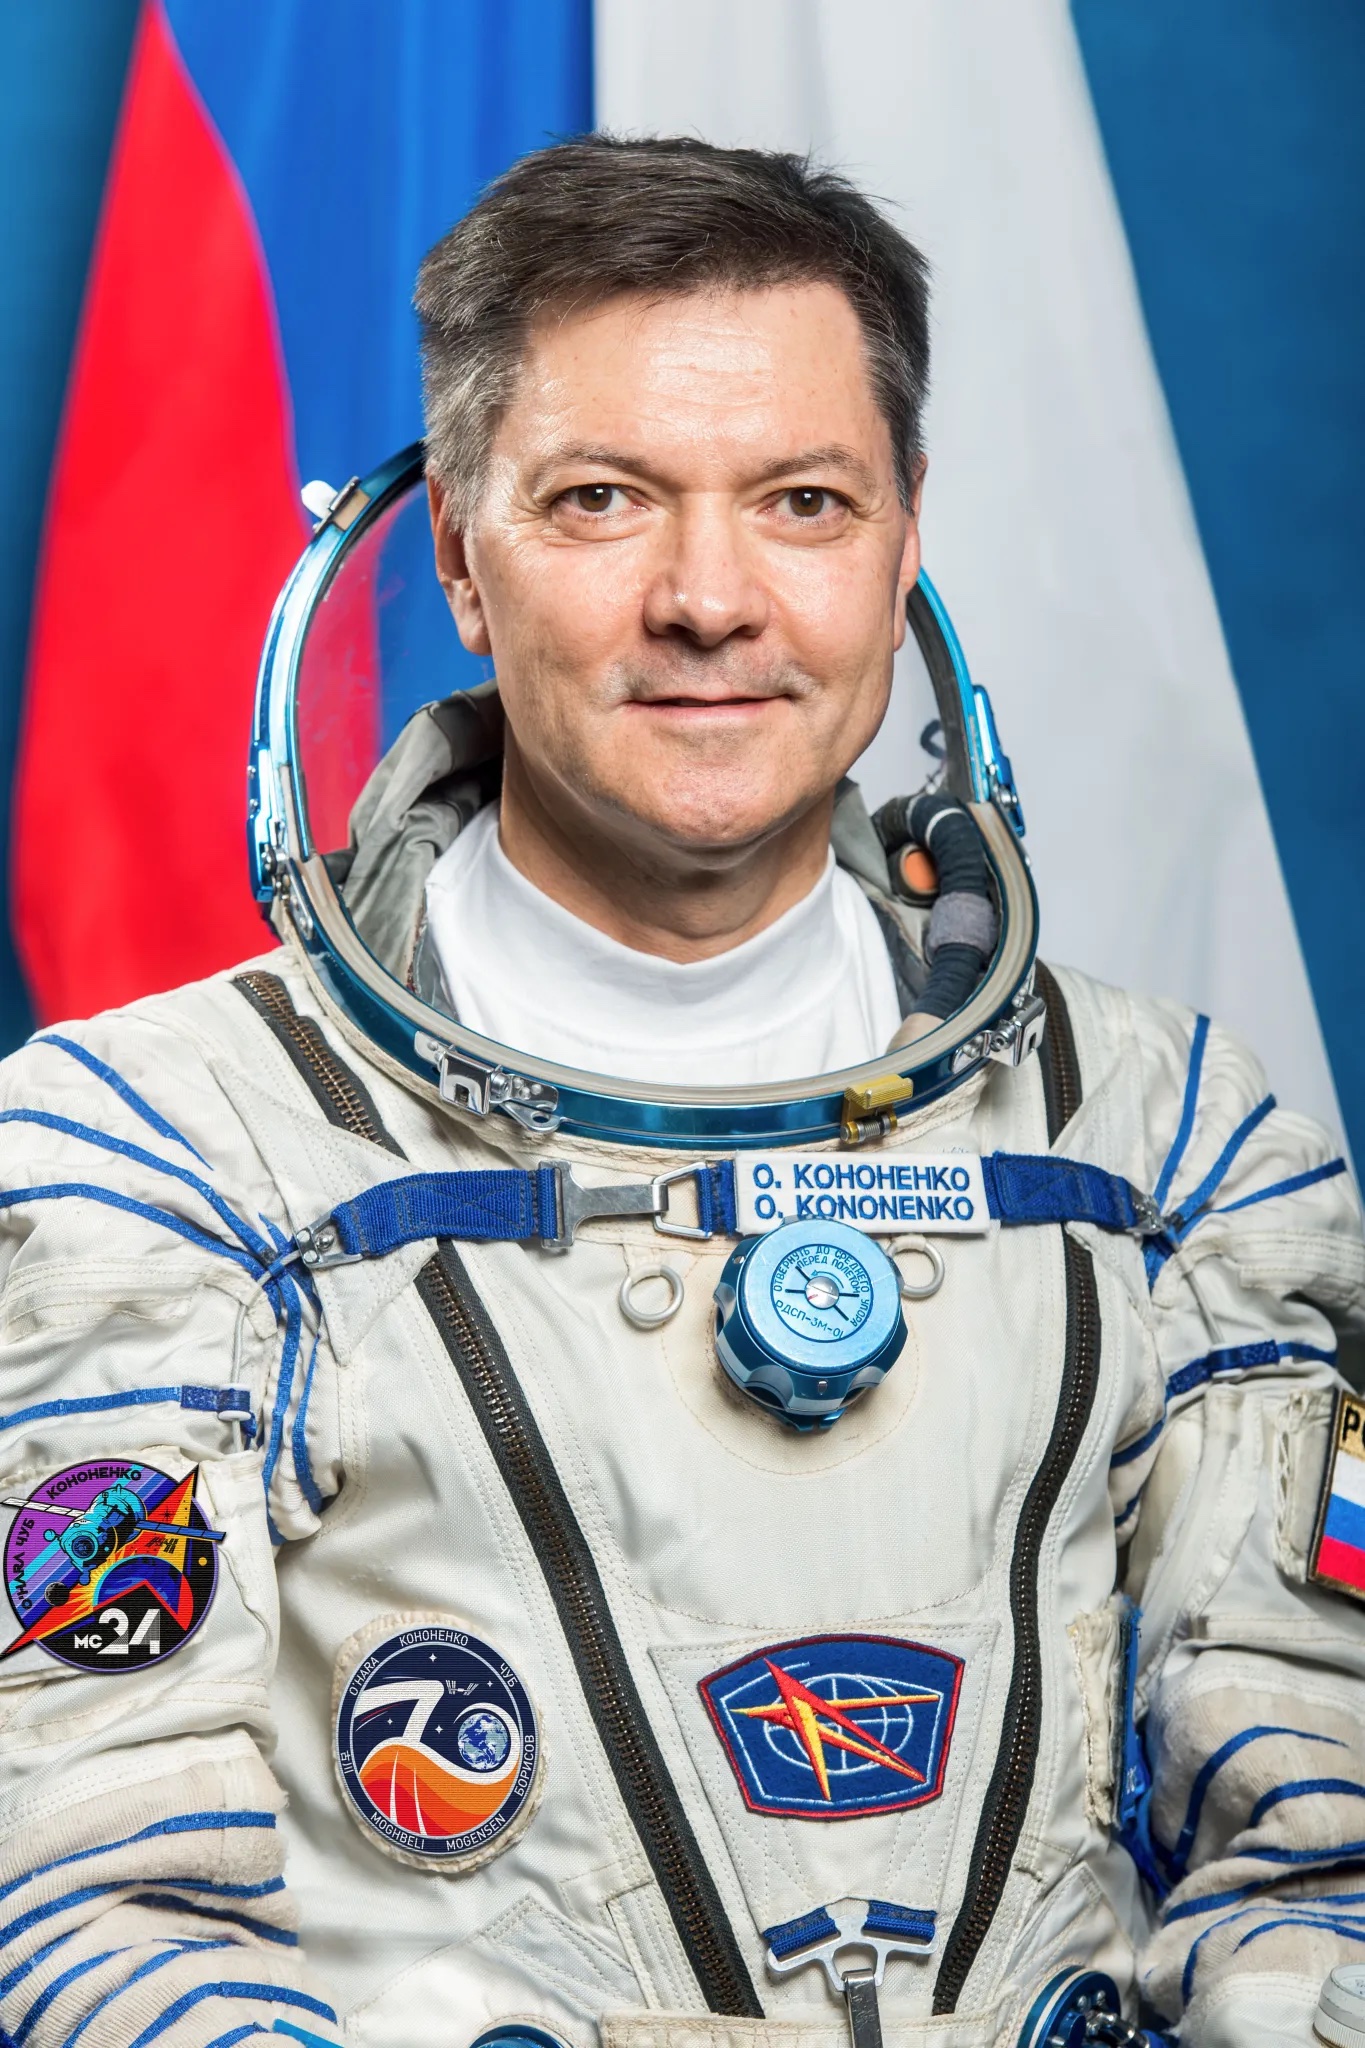 Oleg Kononenko. Credit: Andrey Shelepin/NASA.